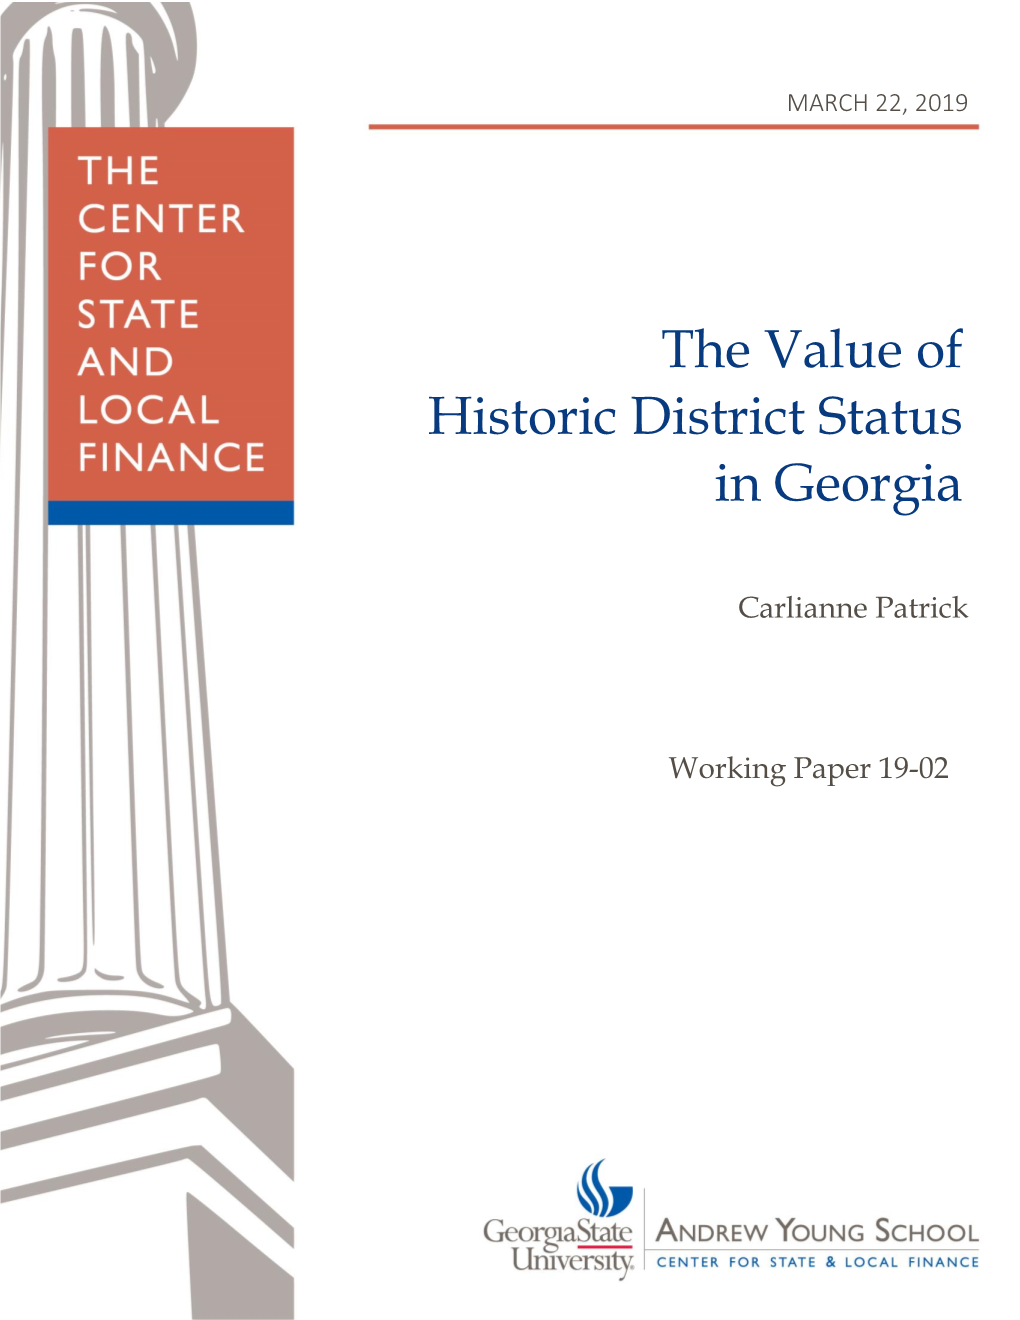 The Value of Historic District Status in Georgia